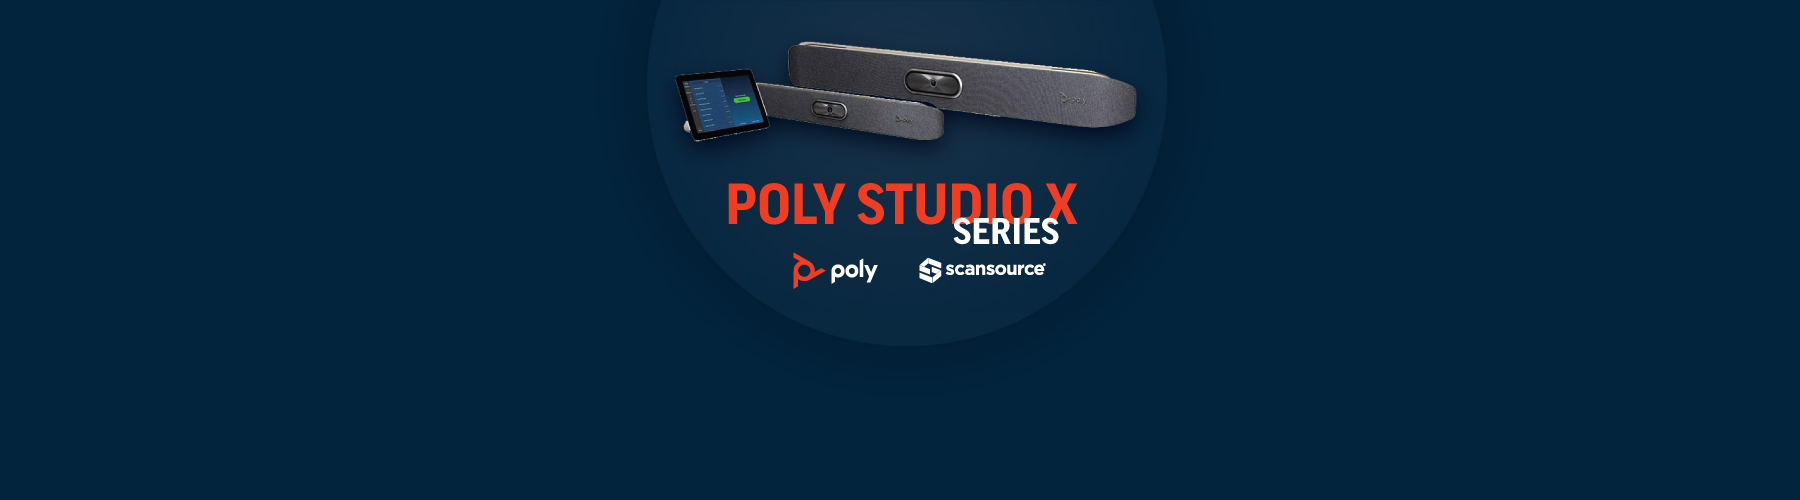 polystudiox-header-188x500